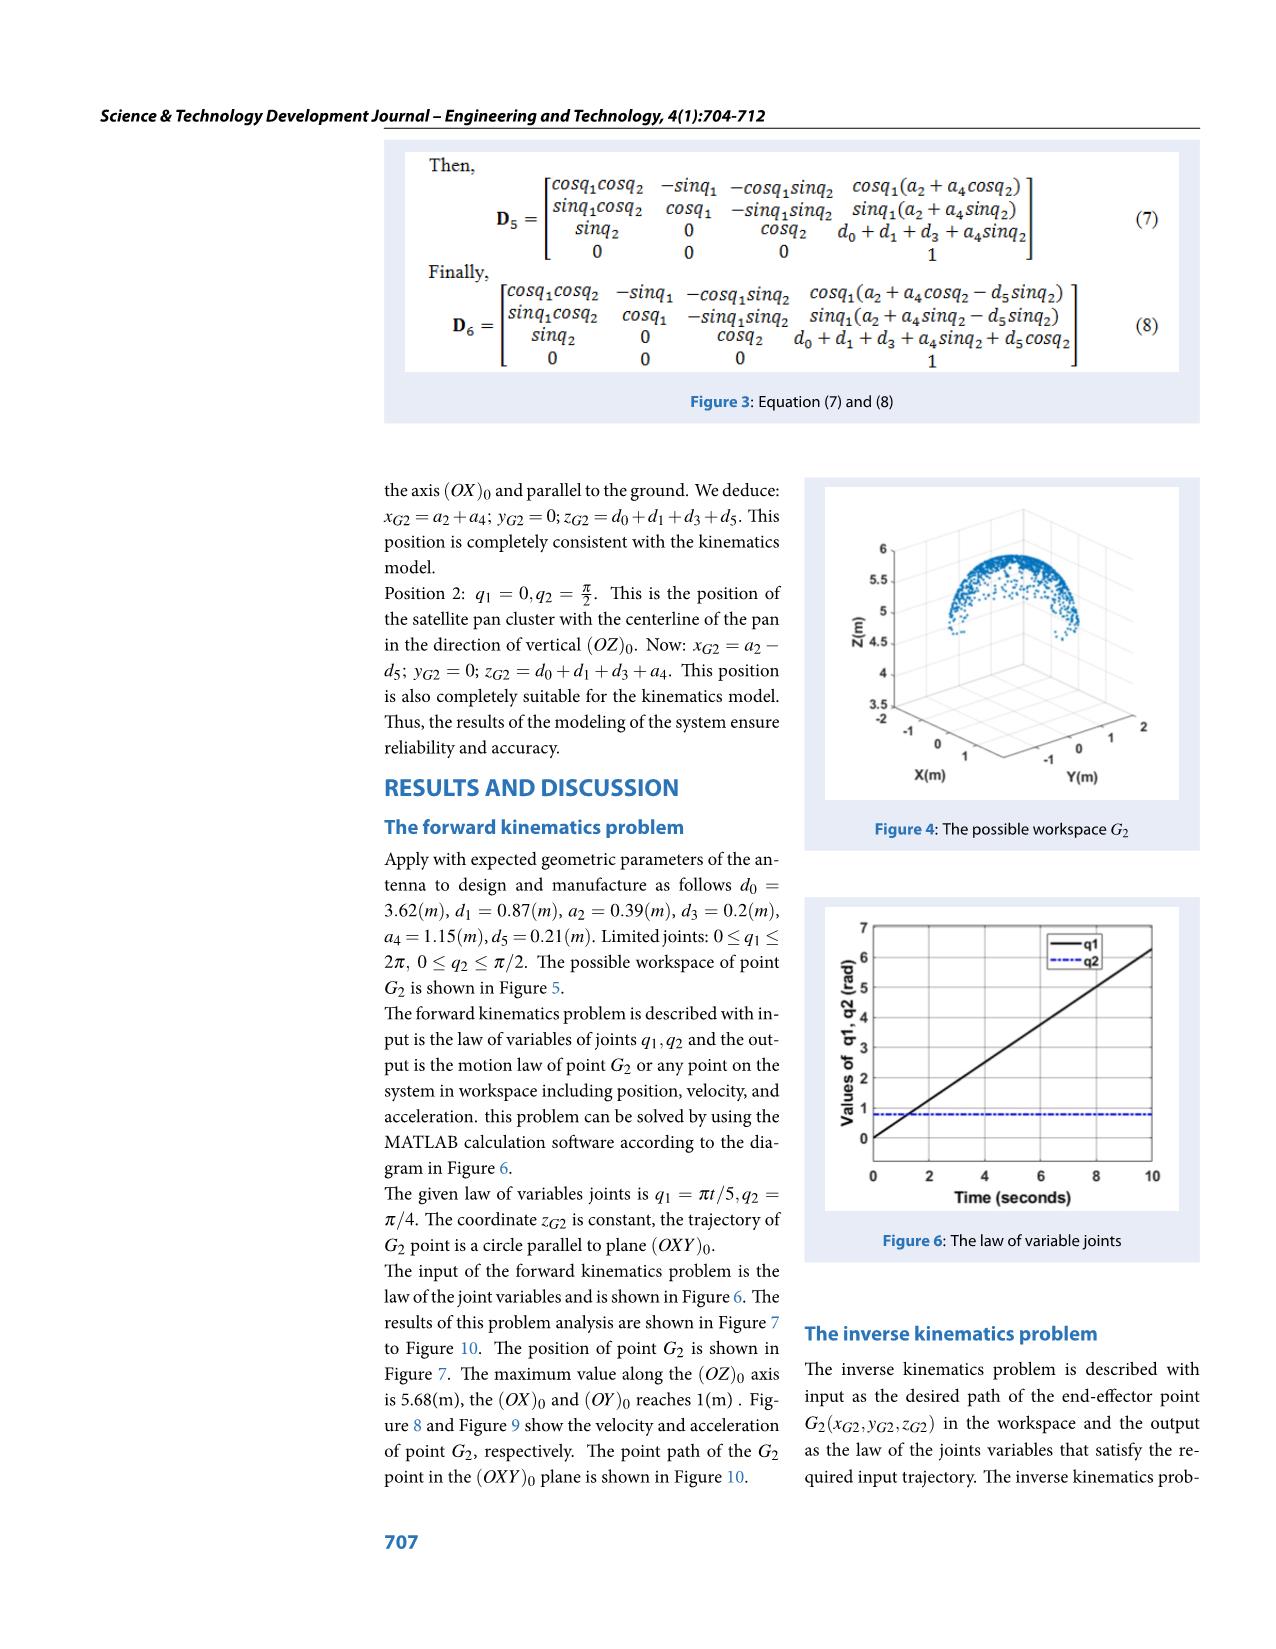 Kinematics modeling analysis of the geostationary satellite monitoring antenna system trang 4